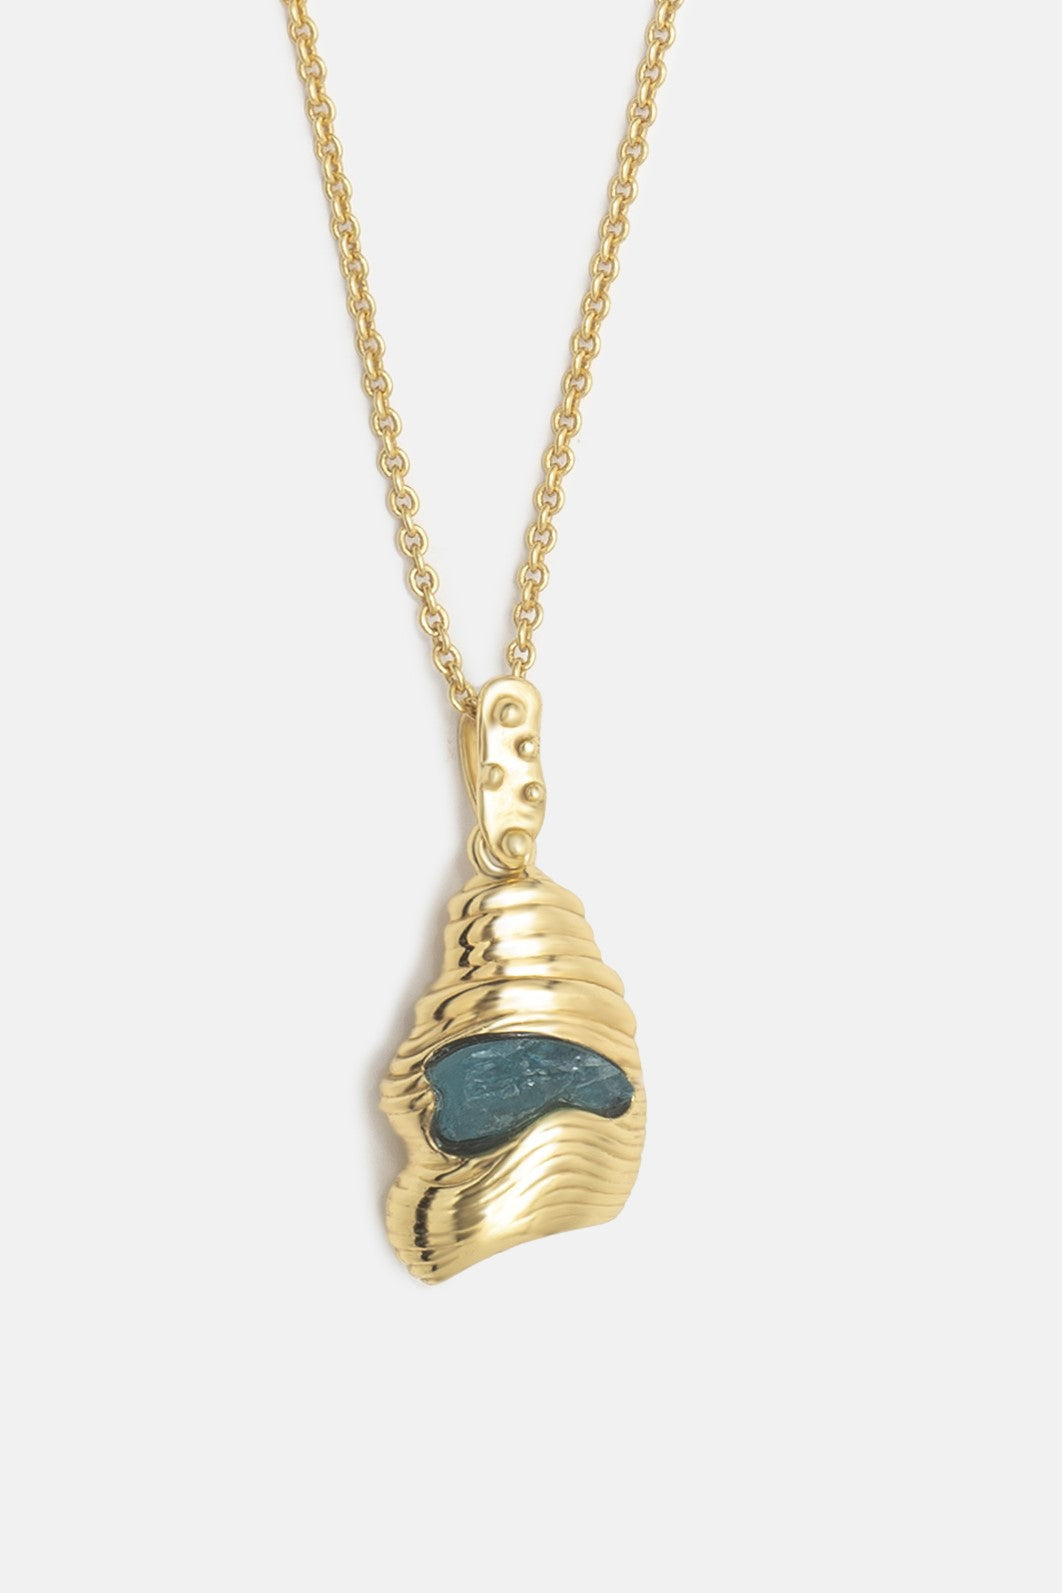 blue grotto apatite stone pendant gold necklace Mamour Paris jewelry